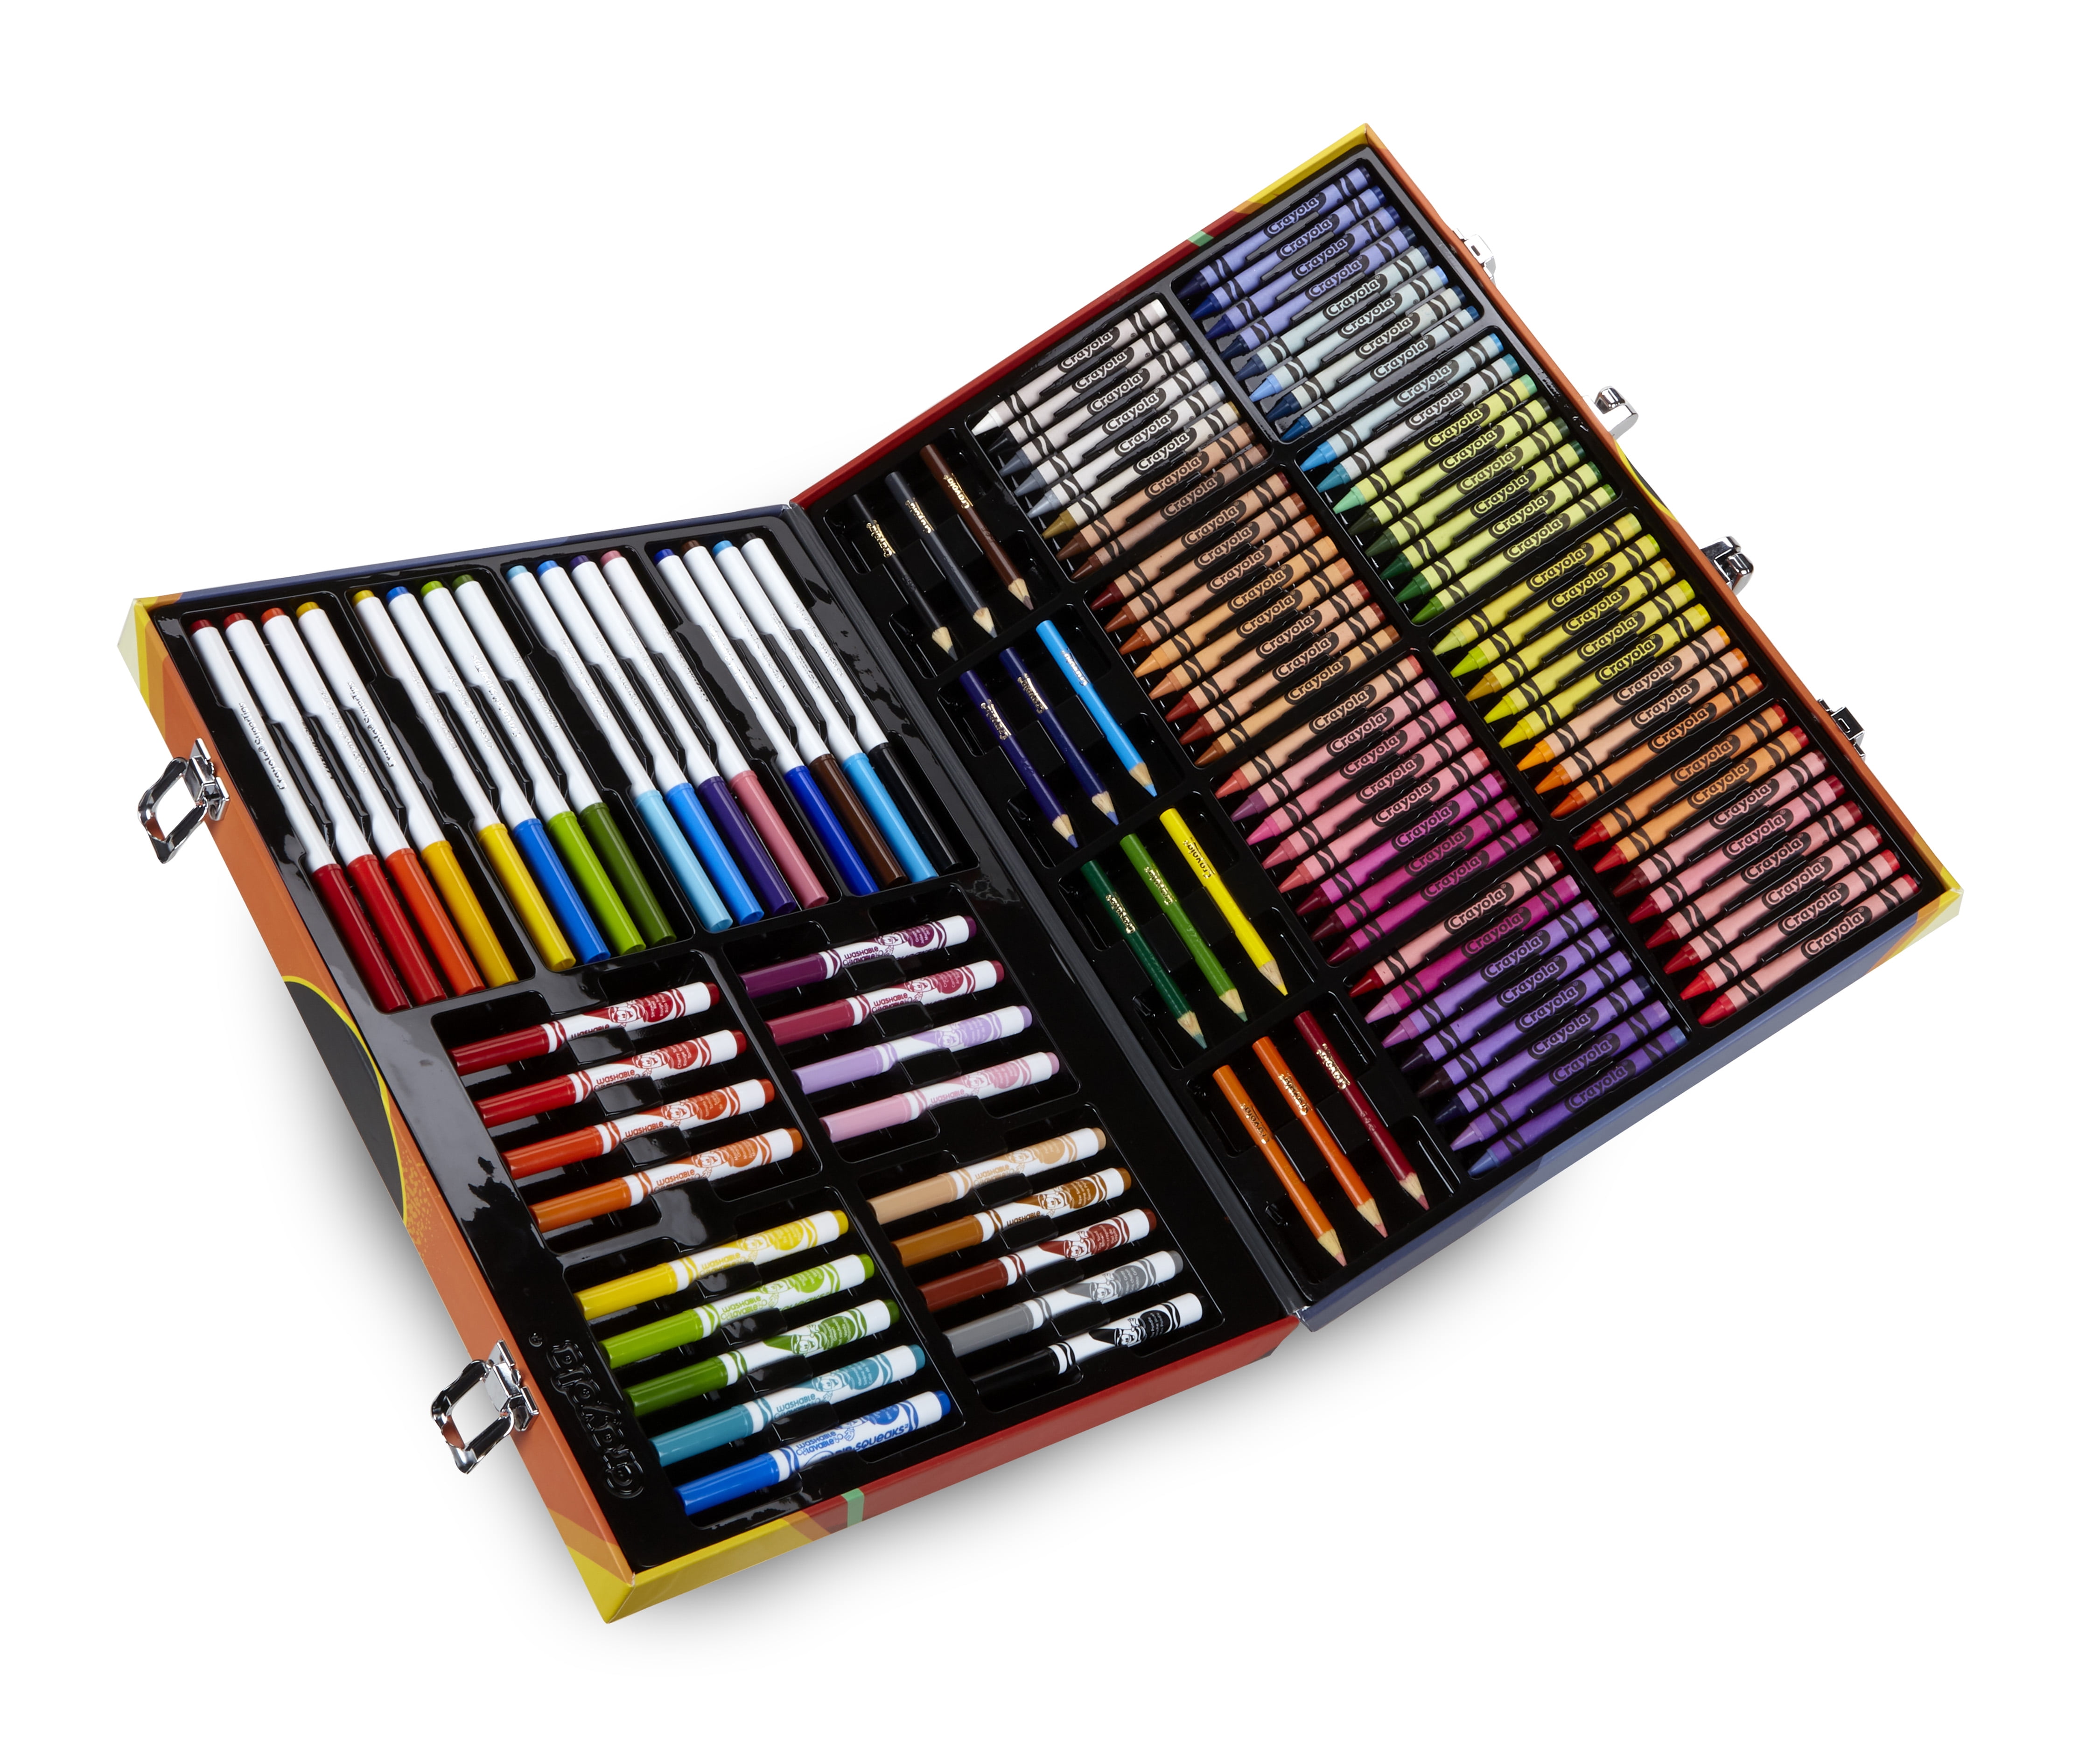 Clayola Crayola Drawing inspiration Art Case 04-2532 